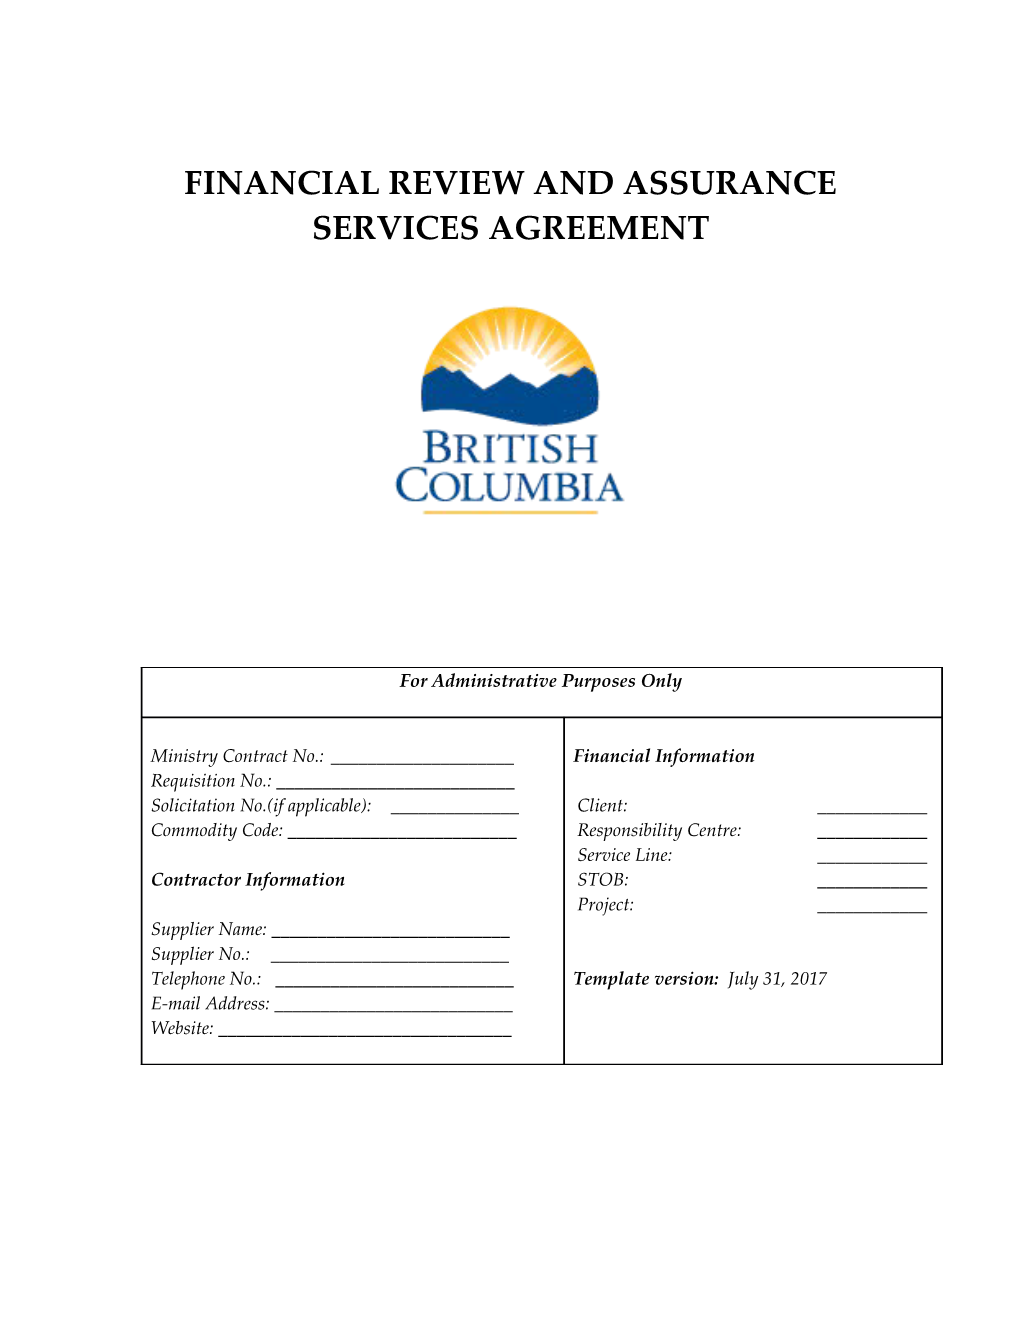 Financial Review and Assurance Servicesagreement